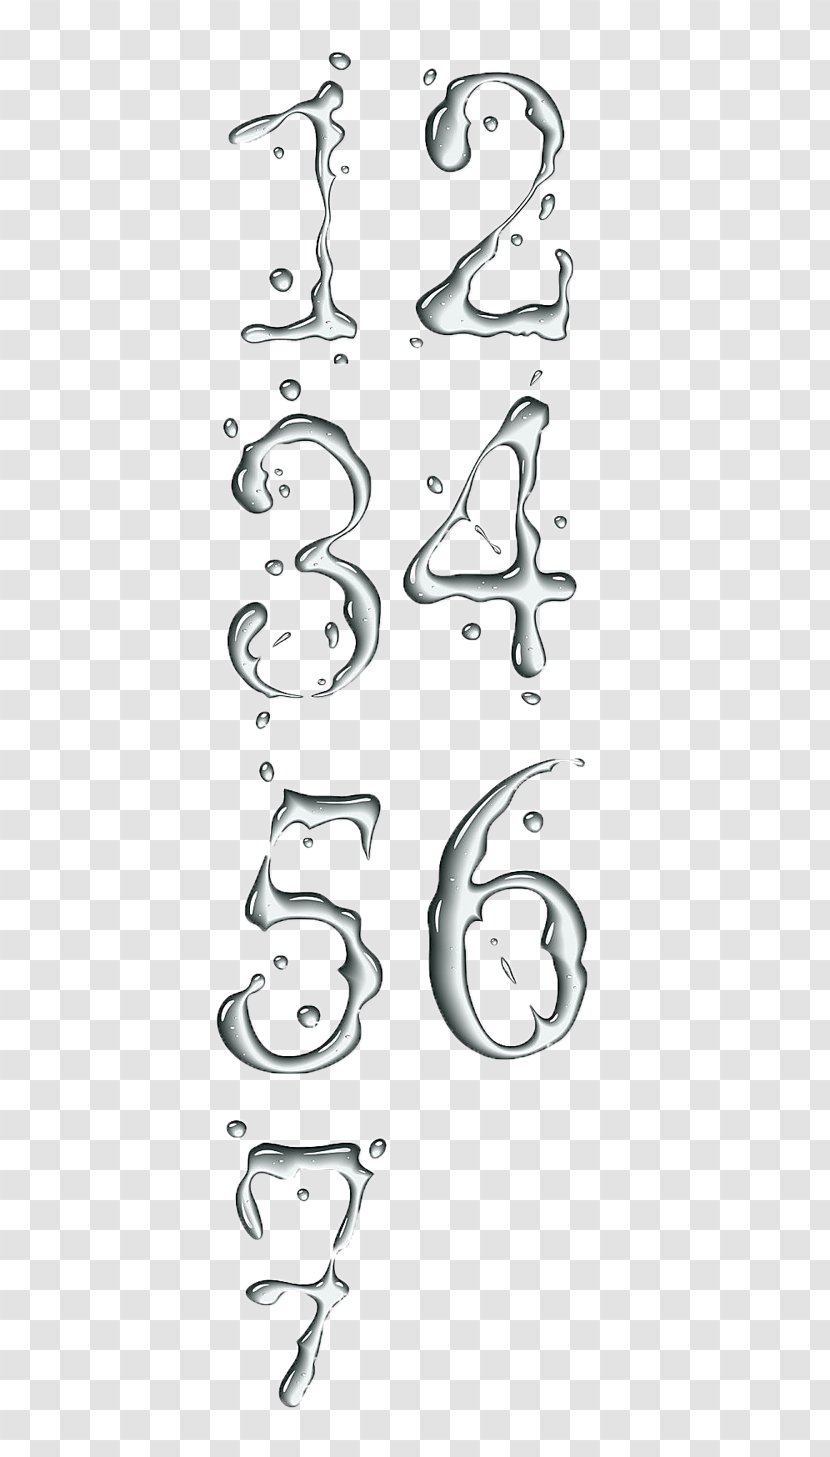 Numerical Digit Arabic Numerals Water Drop - Droplets 1234567 Transparent PNG